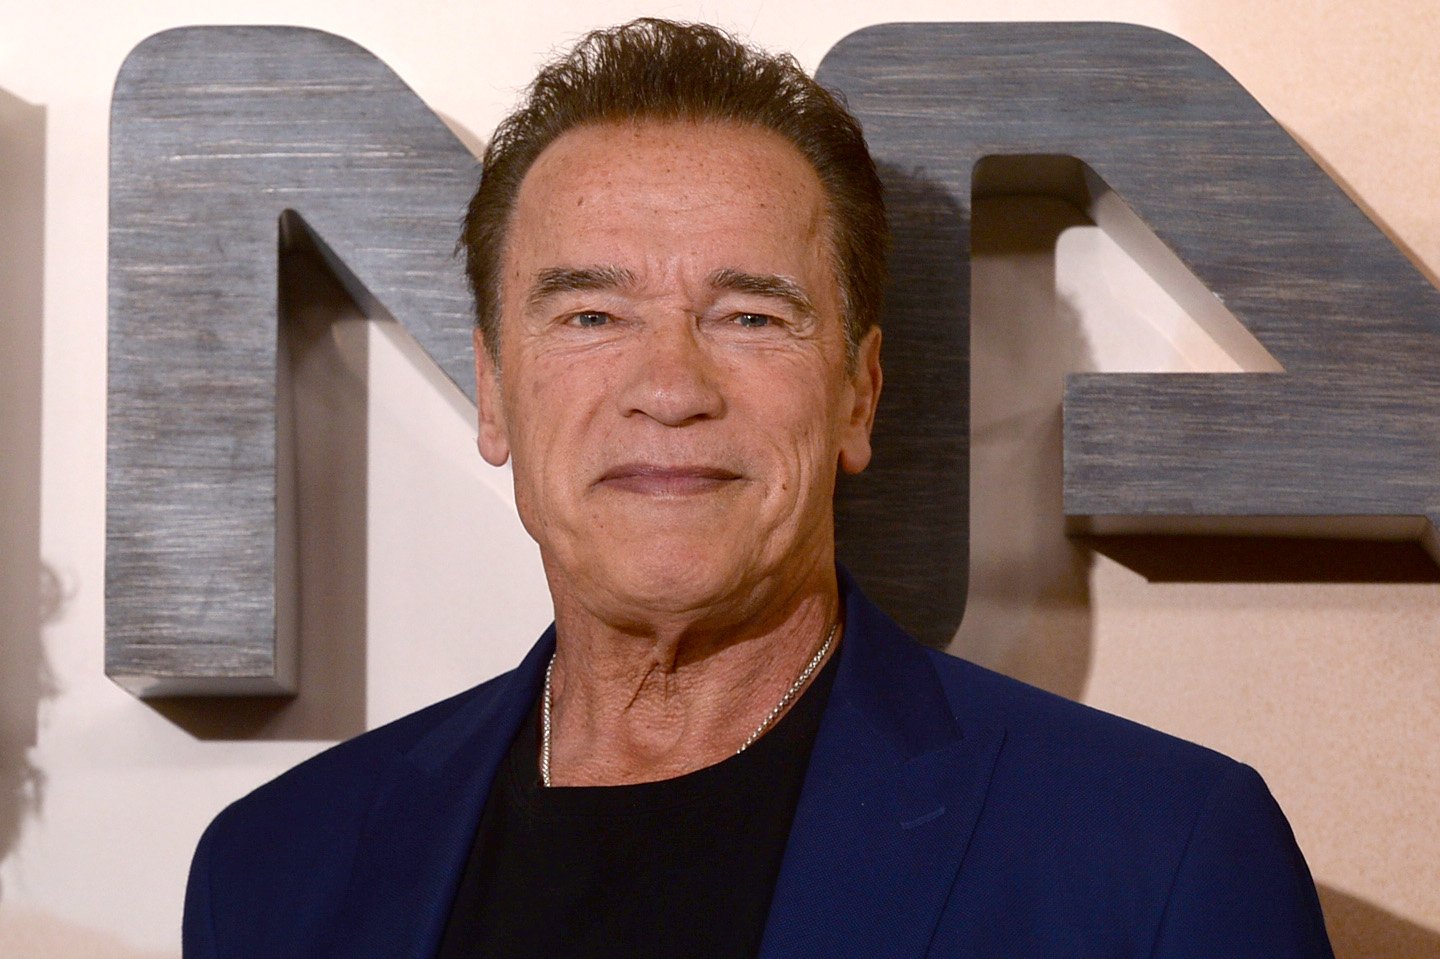 Arnold Schwarzenegger fotografiado en el photocall de "Terminator: Dark Fate" en 2019, en Londres, Inglaterra. | Foto: Getty Images